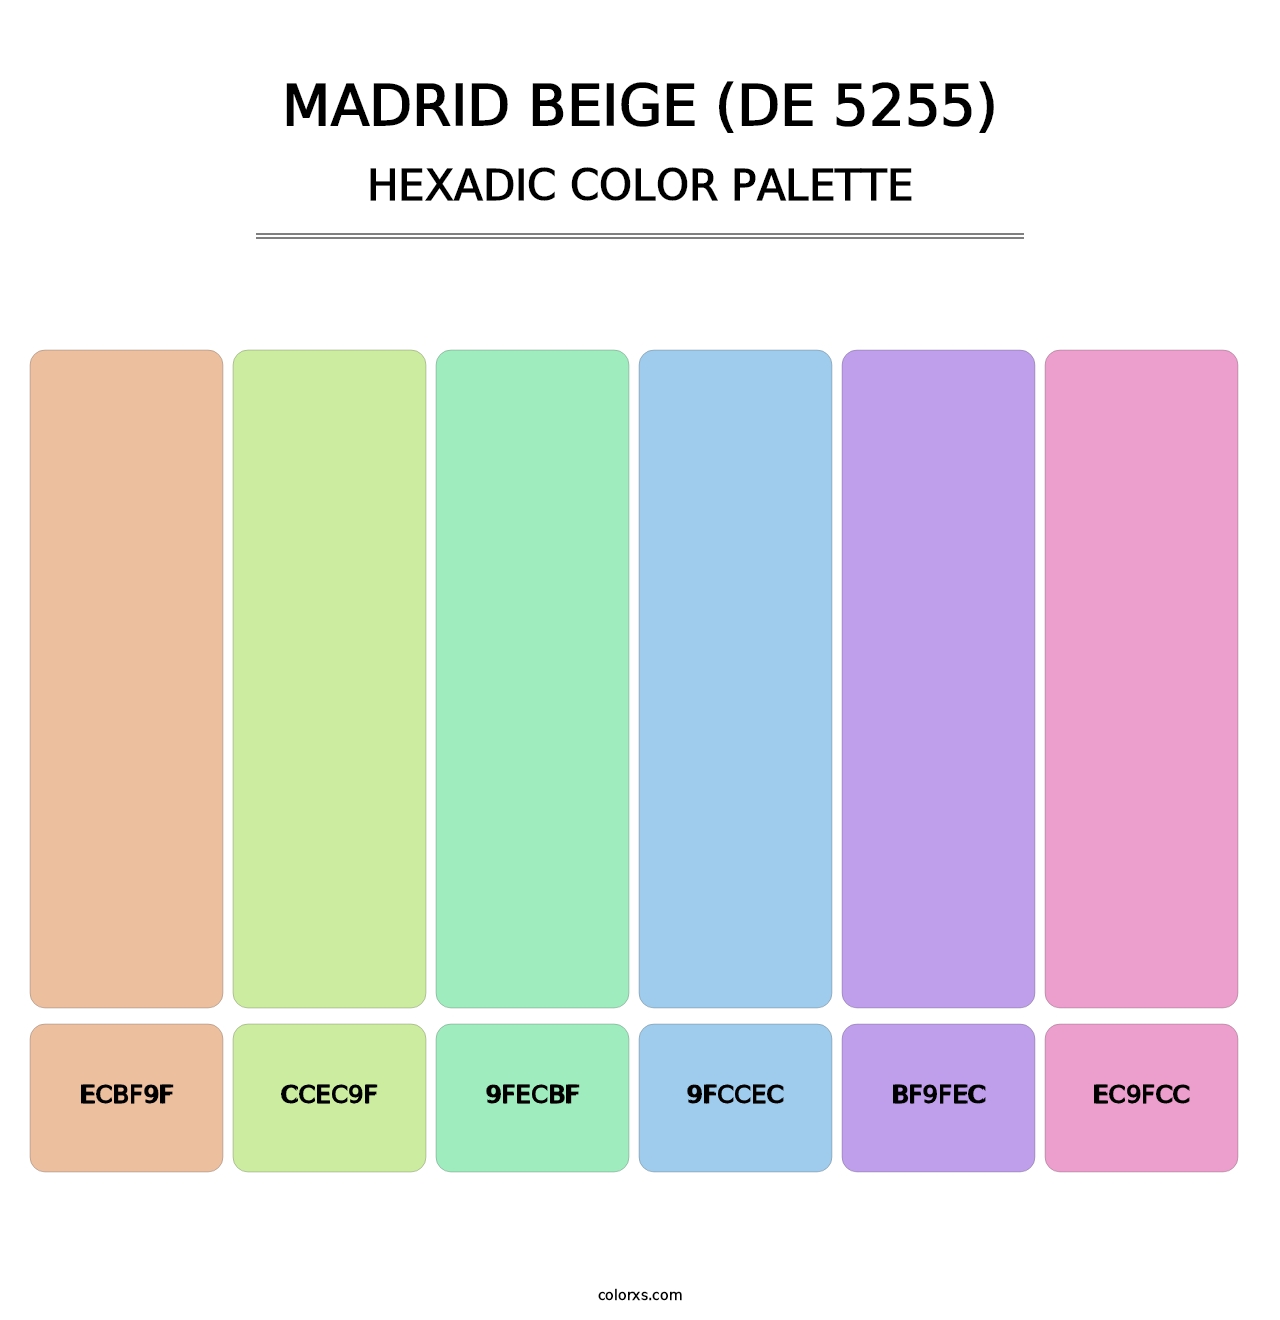 Madrid Beige (DE 5255) - Hexadic Color Palette